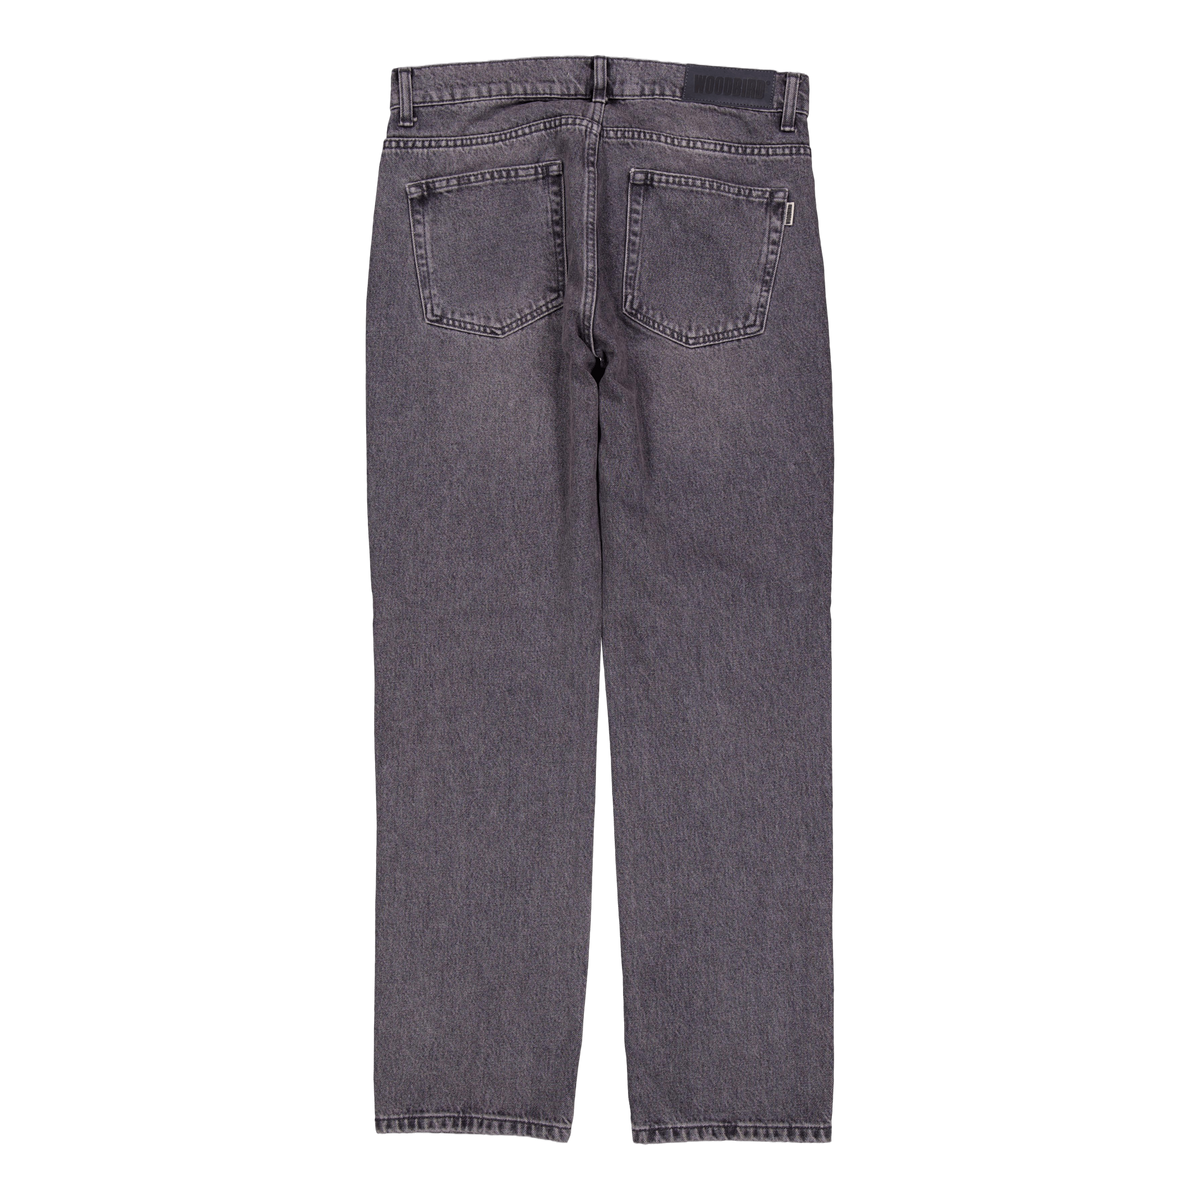 Wbjay Eclipse Jeans Grey-black